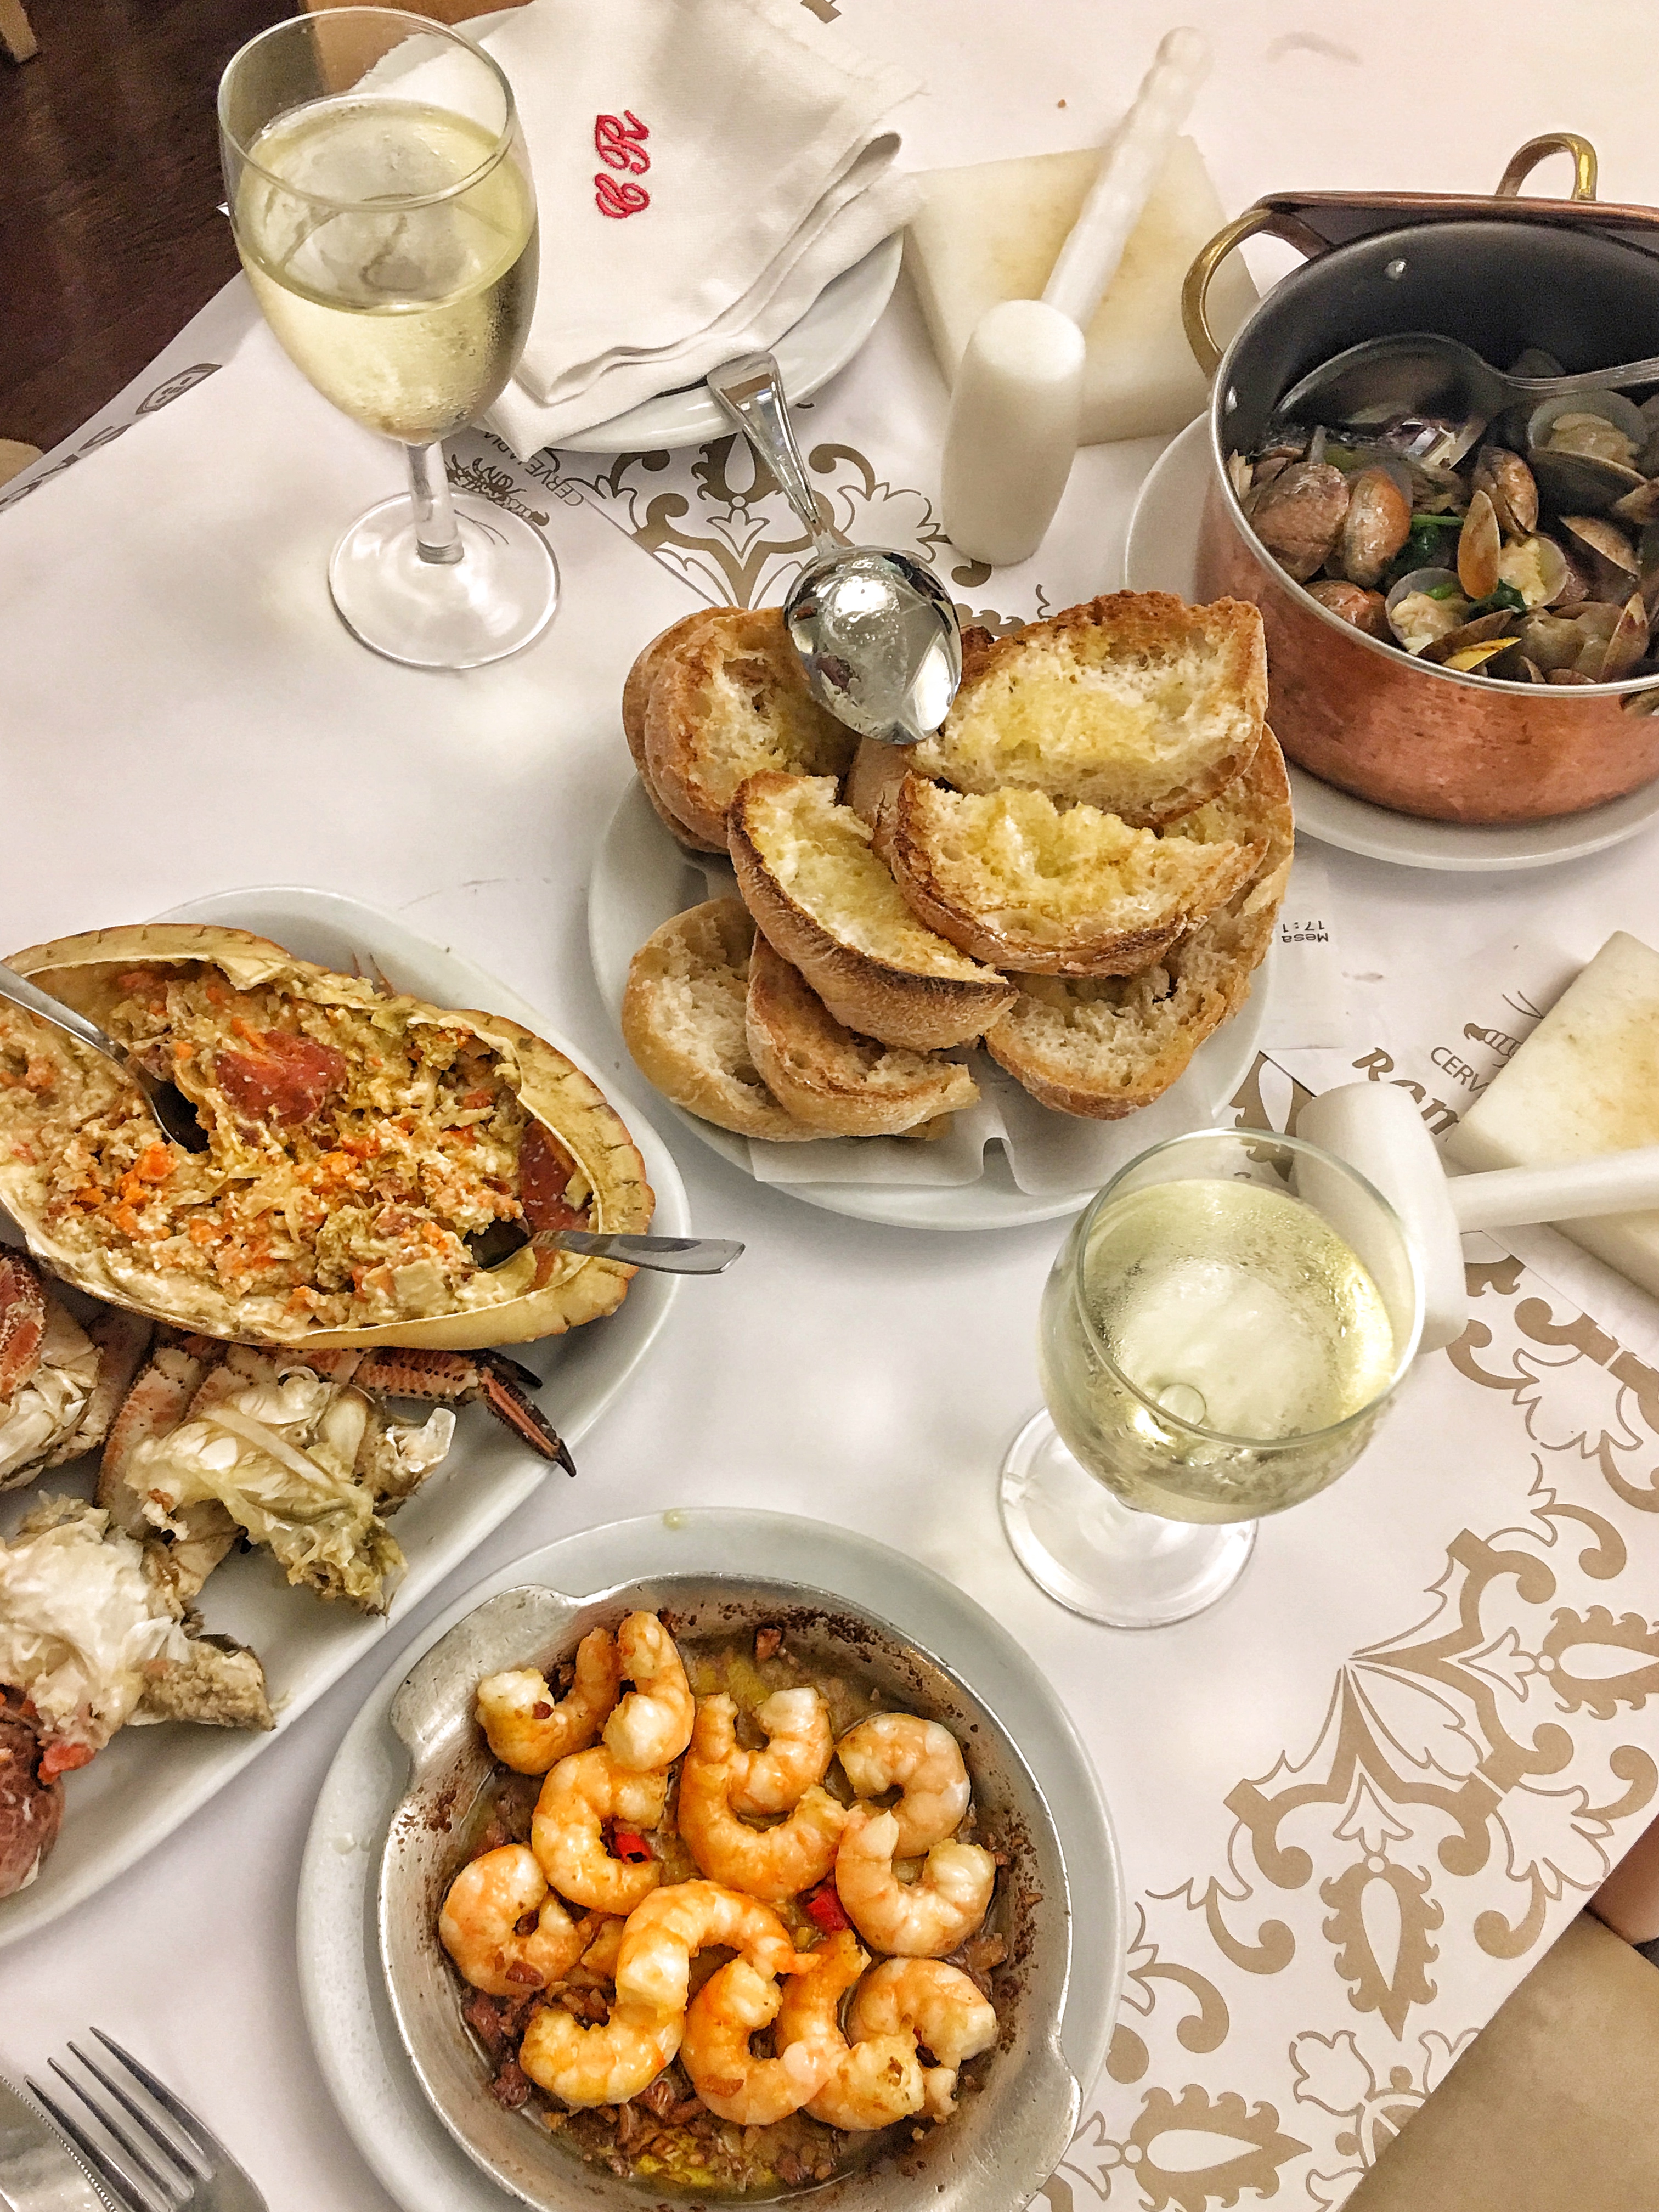 Perfect seafood feast at Cervejaria Ramiro in Lisbon